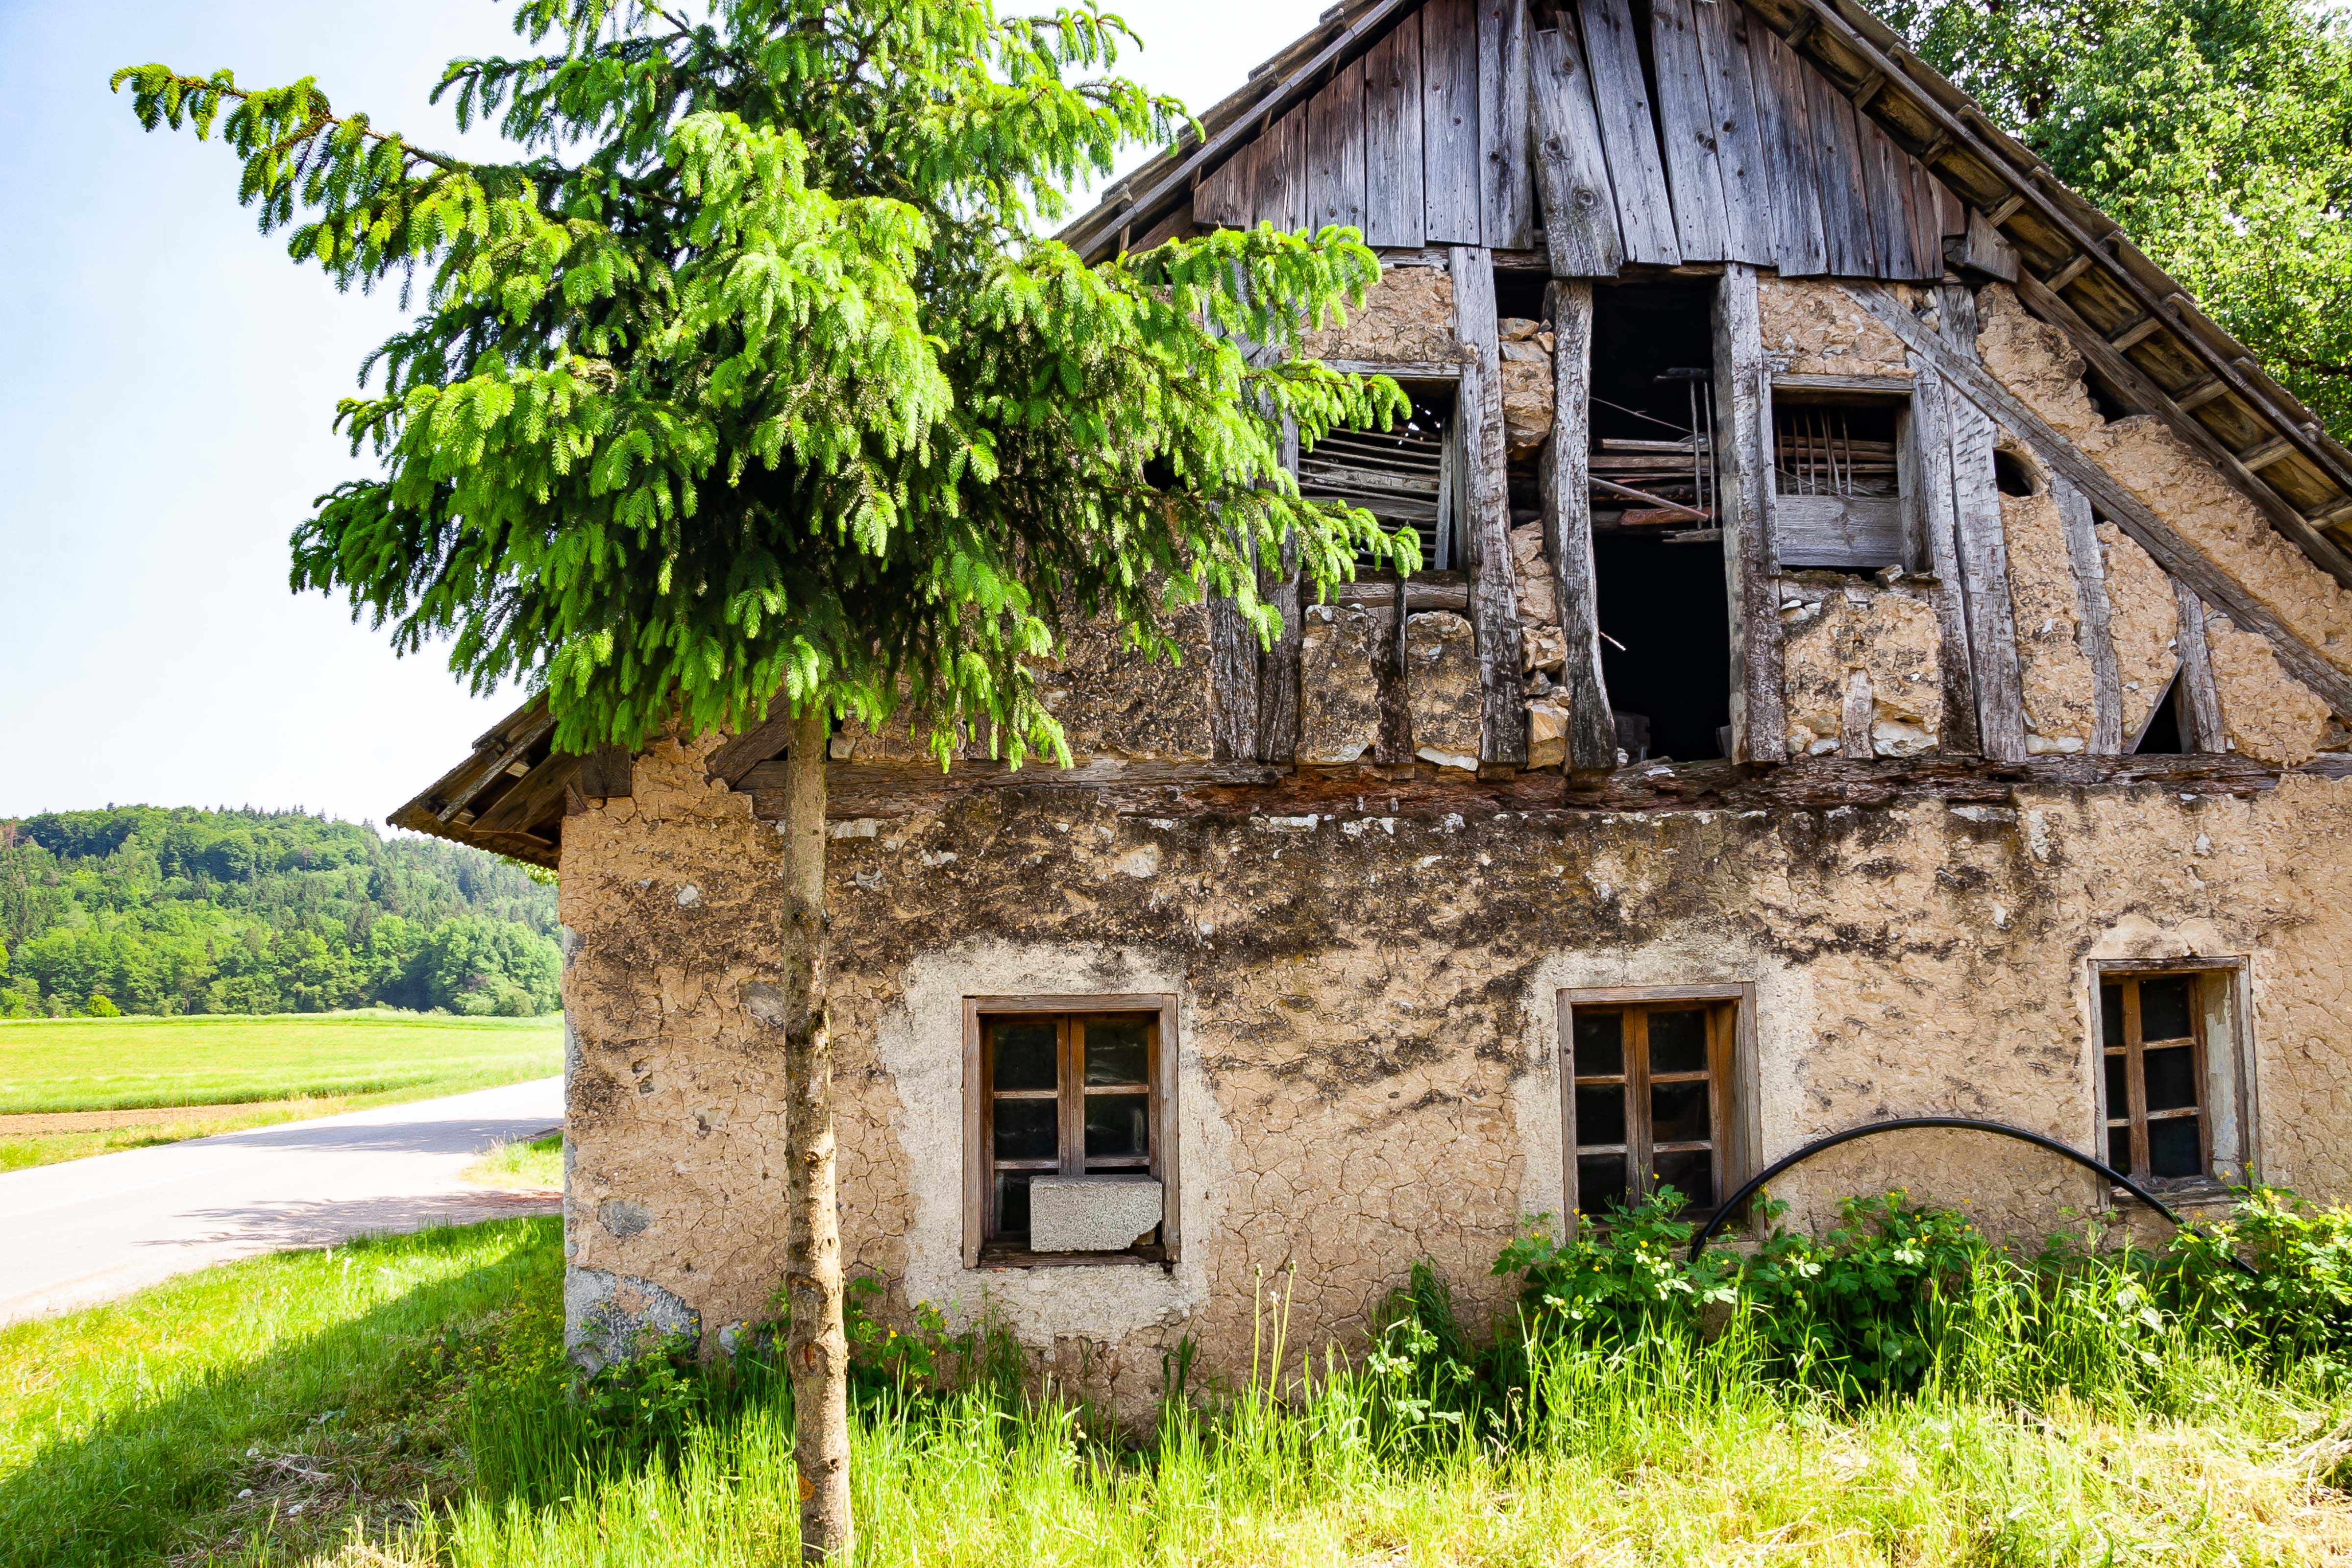 Slovenia, Trebnje Prov, Abandoned House, 2006, IMG 7552